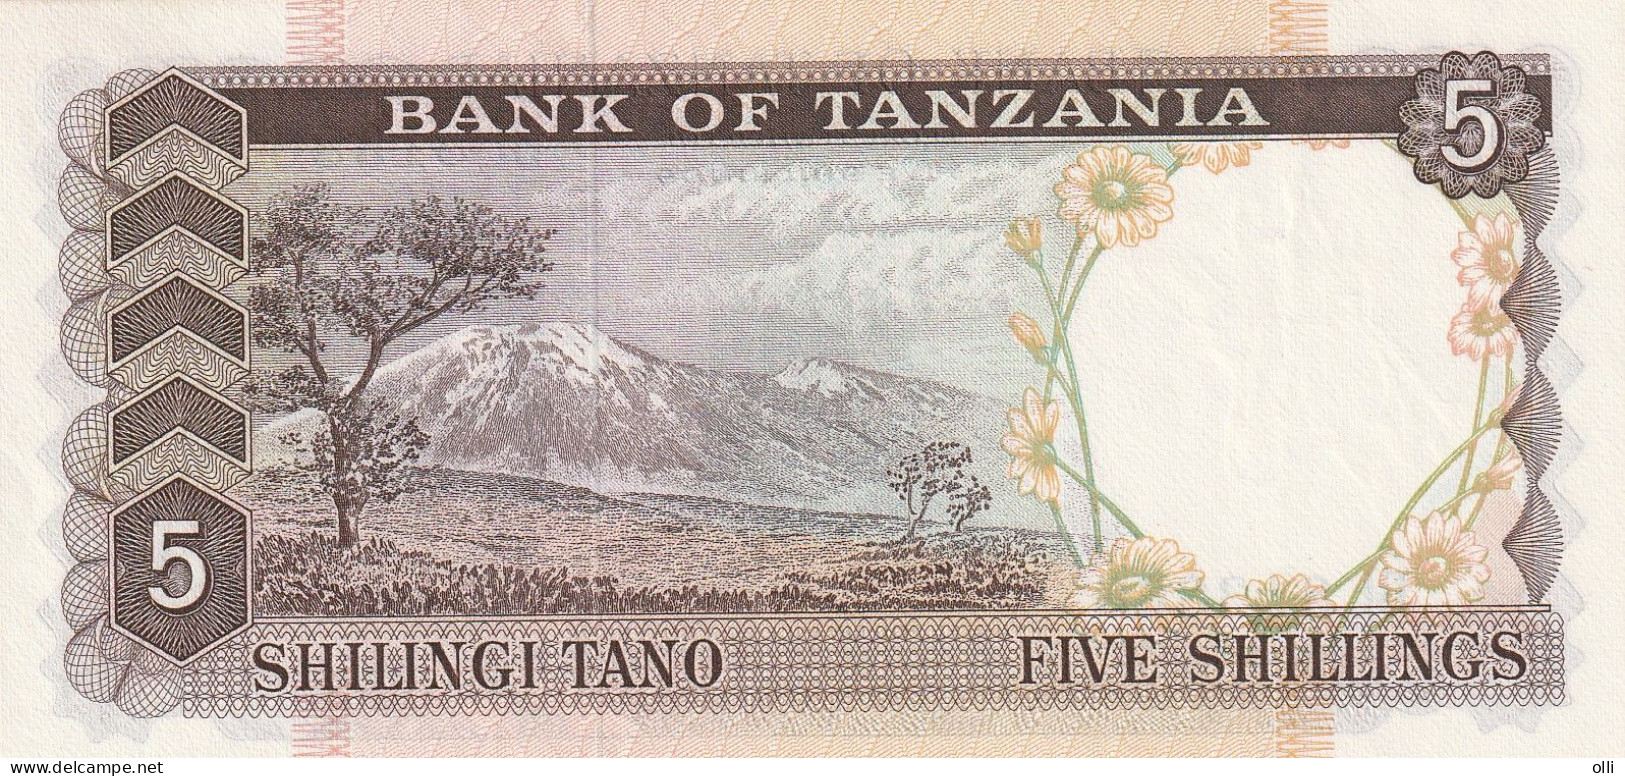 TANZANIA  5 SHILLINGS  1966  P-1   UNC - Tanzania